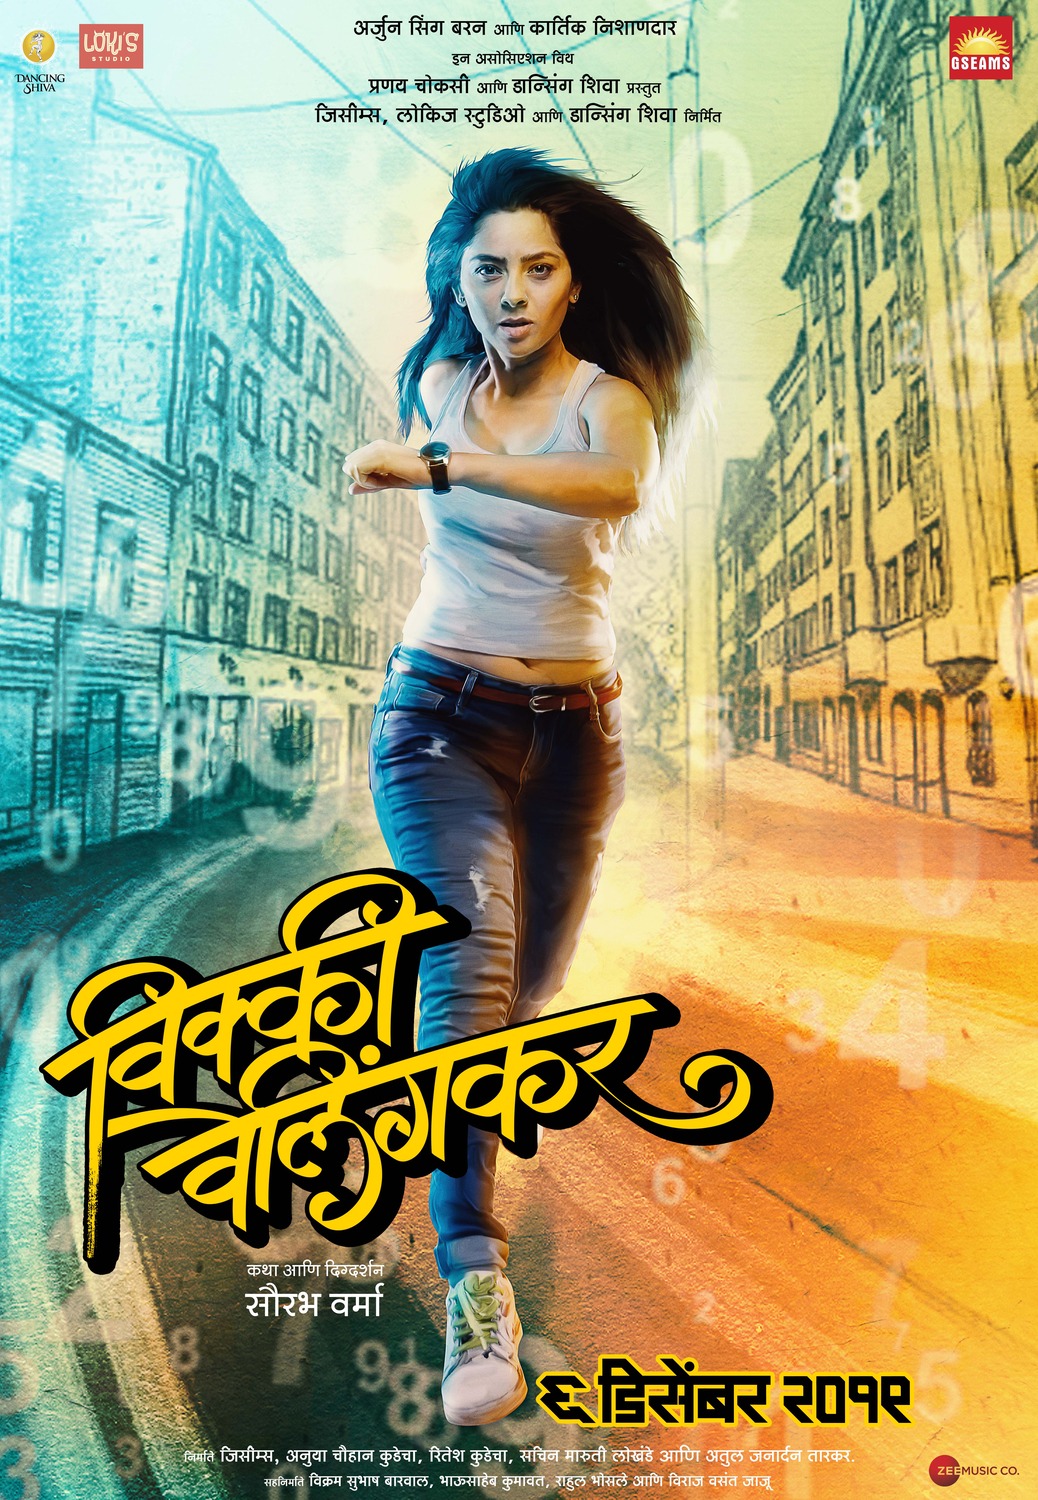 Extra Large Movie Poster Image for Vicky Velingkar (#4 of 9)